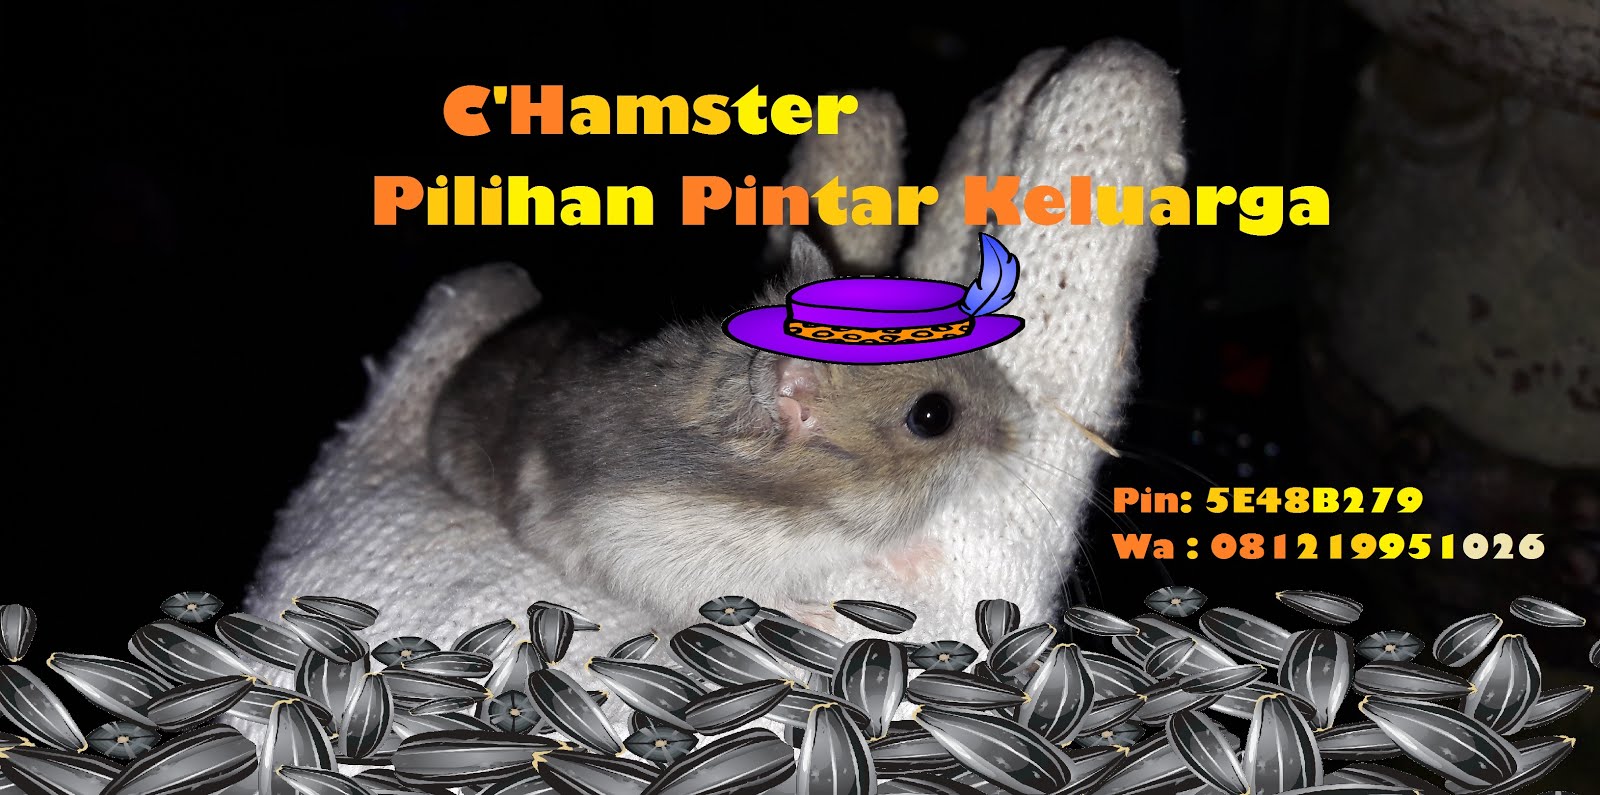 C'Hamster